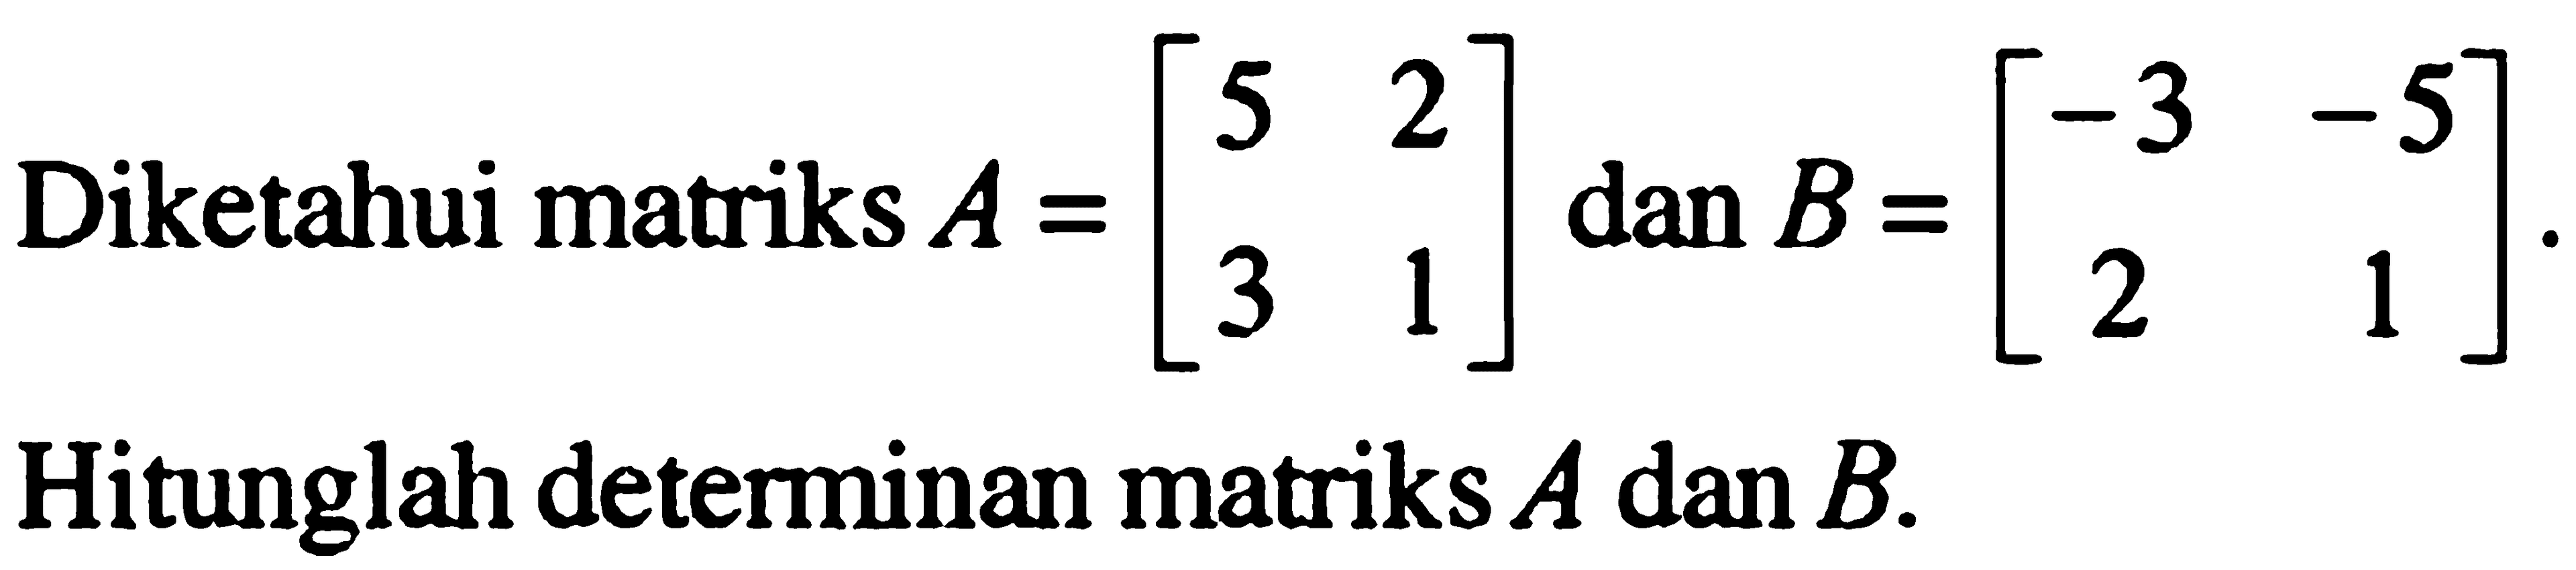 Diketahui matriks A=[5 2 3 1] dan B=[-3 -5 2 1]. Hitunglah determinan matriks A dan B.